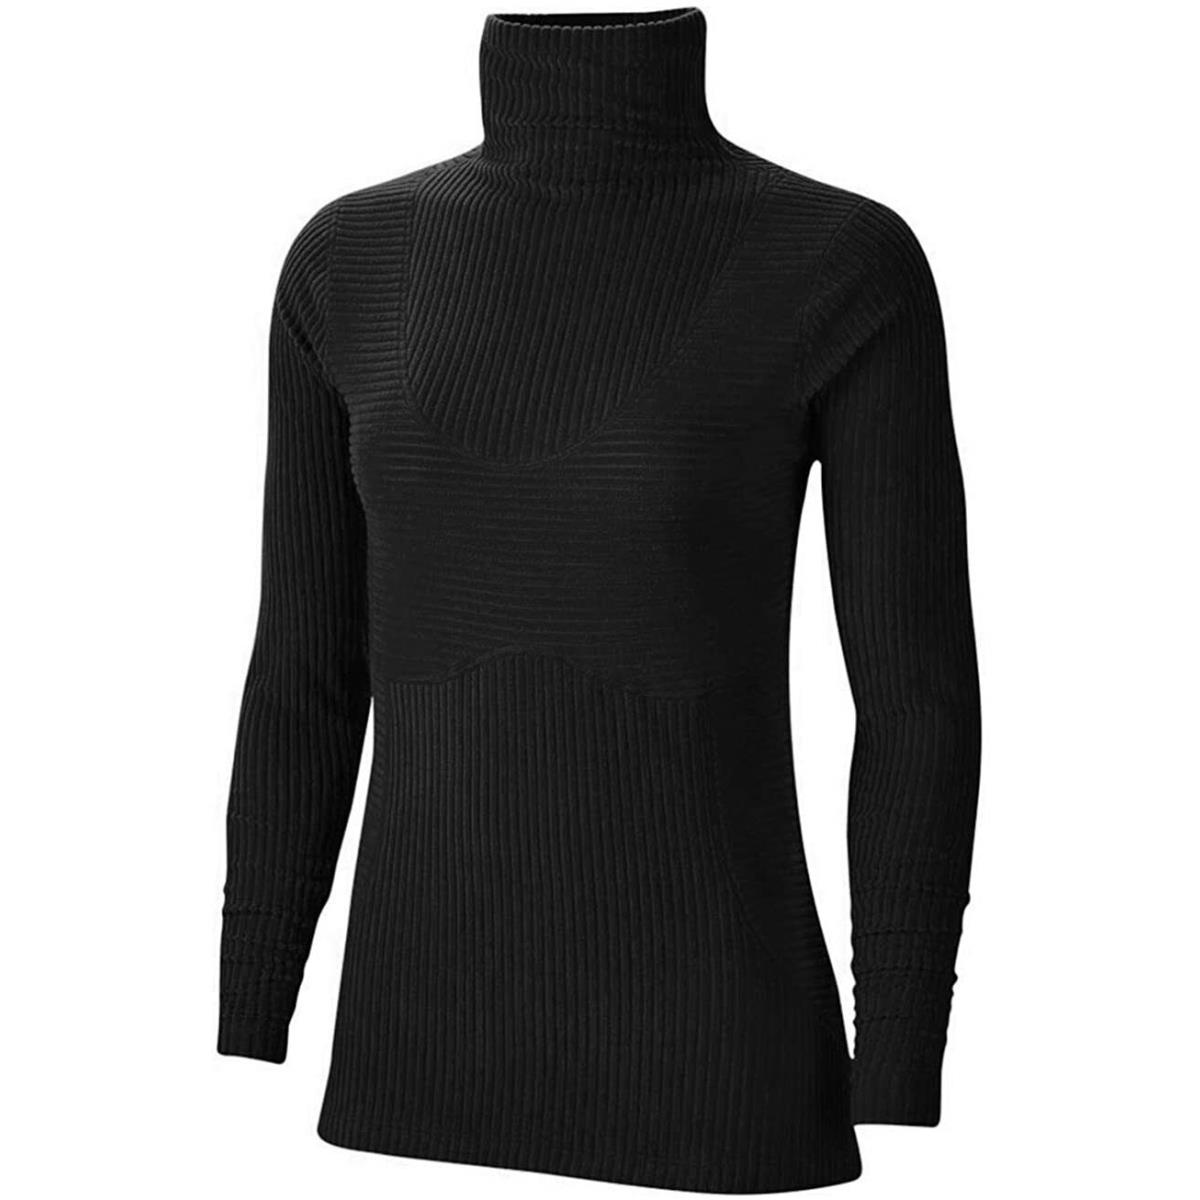 Nike Pro Hyperwarm Shirts Tops Womens Training Shirt Velour Top BV5558-010 Black